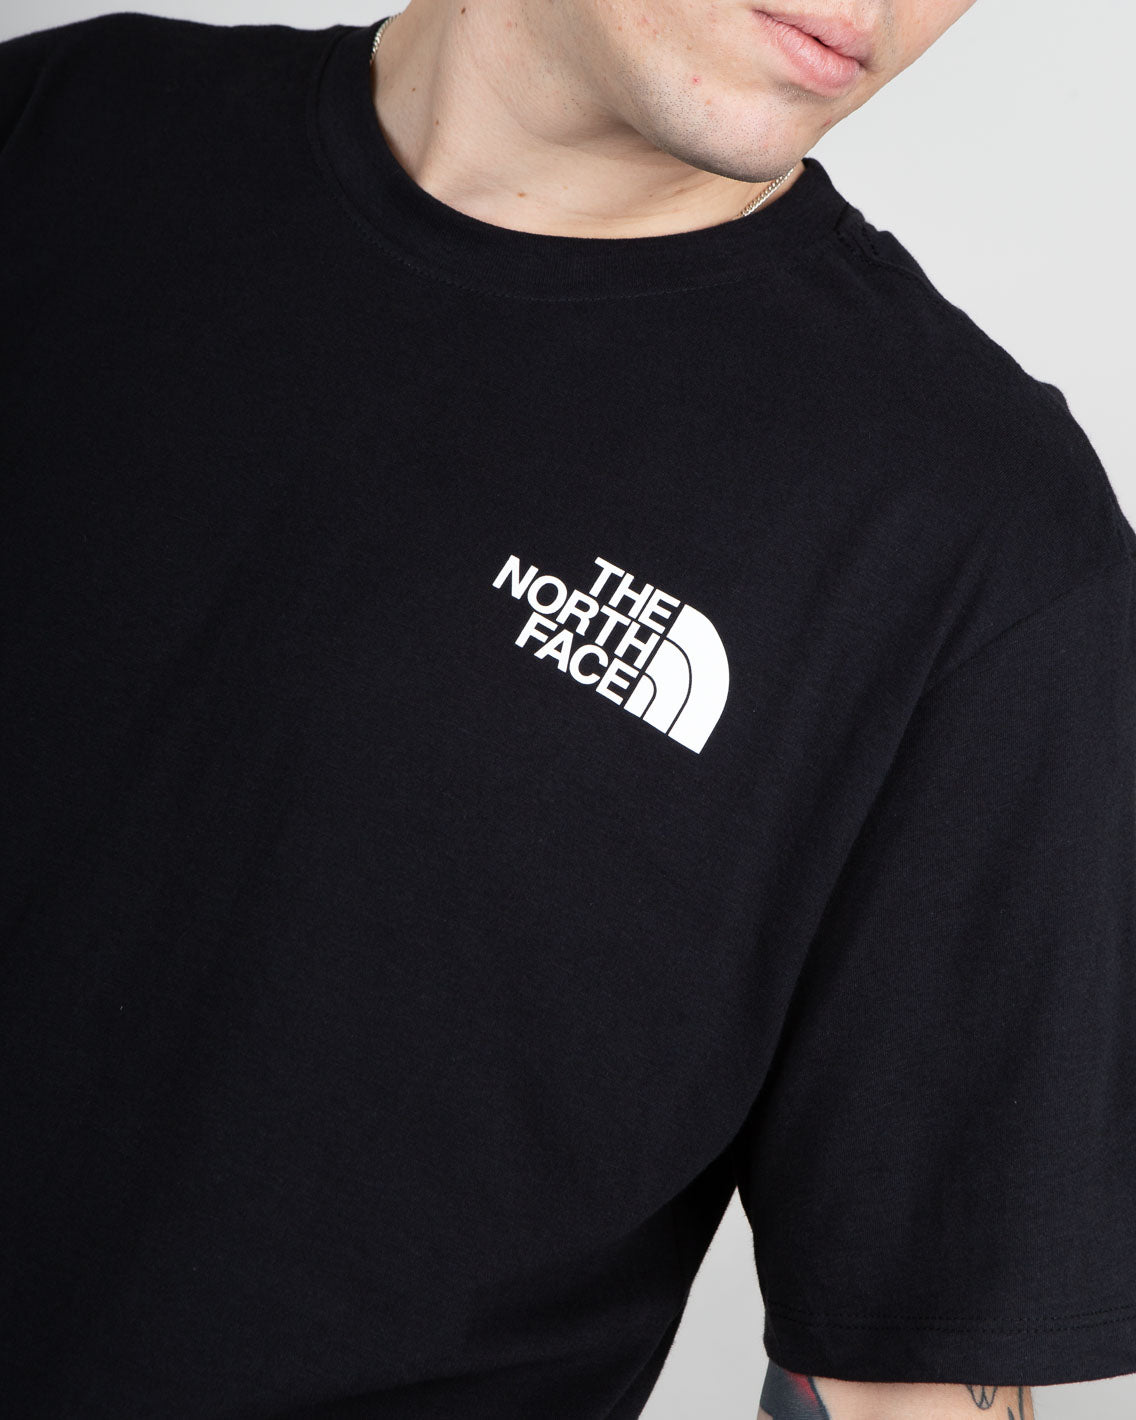 The North Face - Short Sleeve Box NSE Tee - TNF Black / TNF White